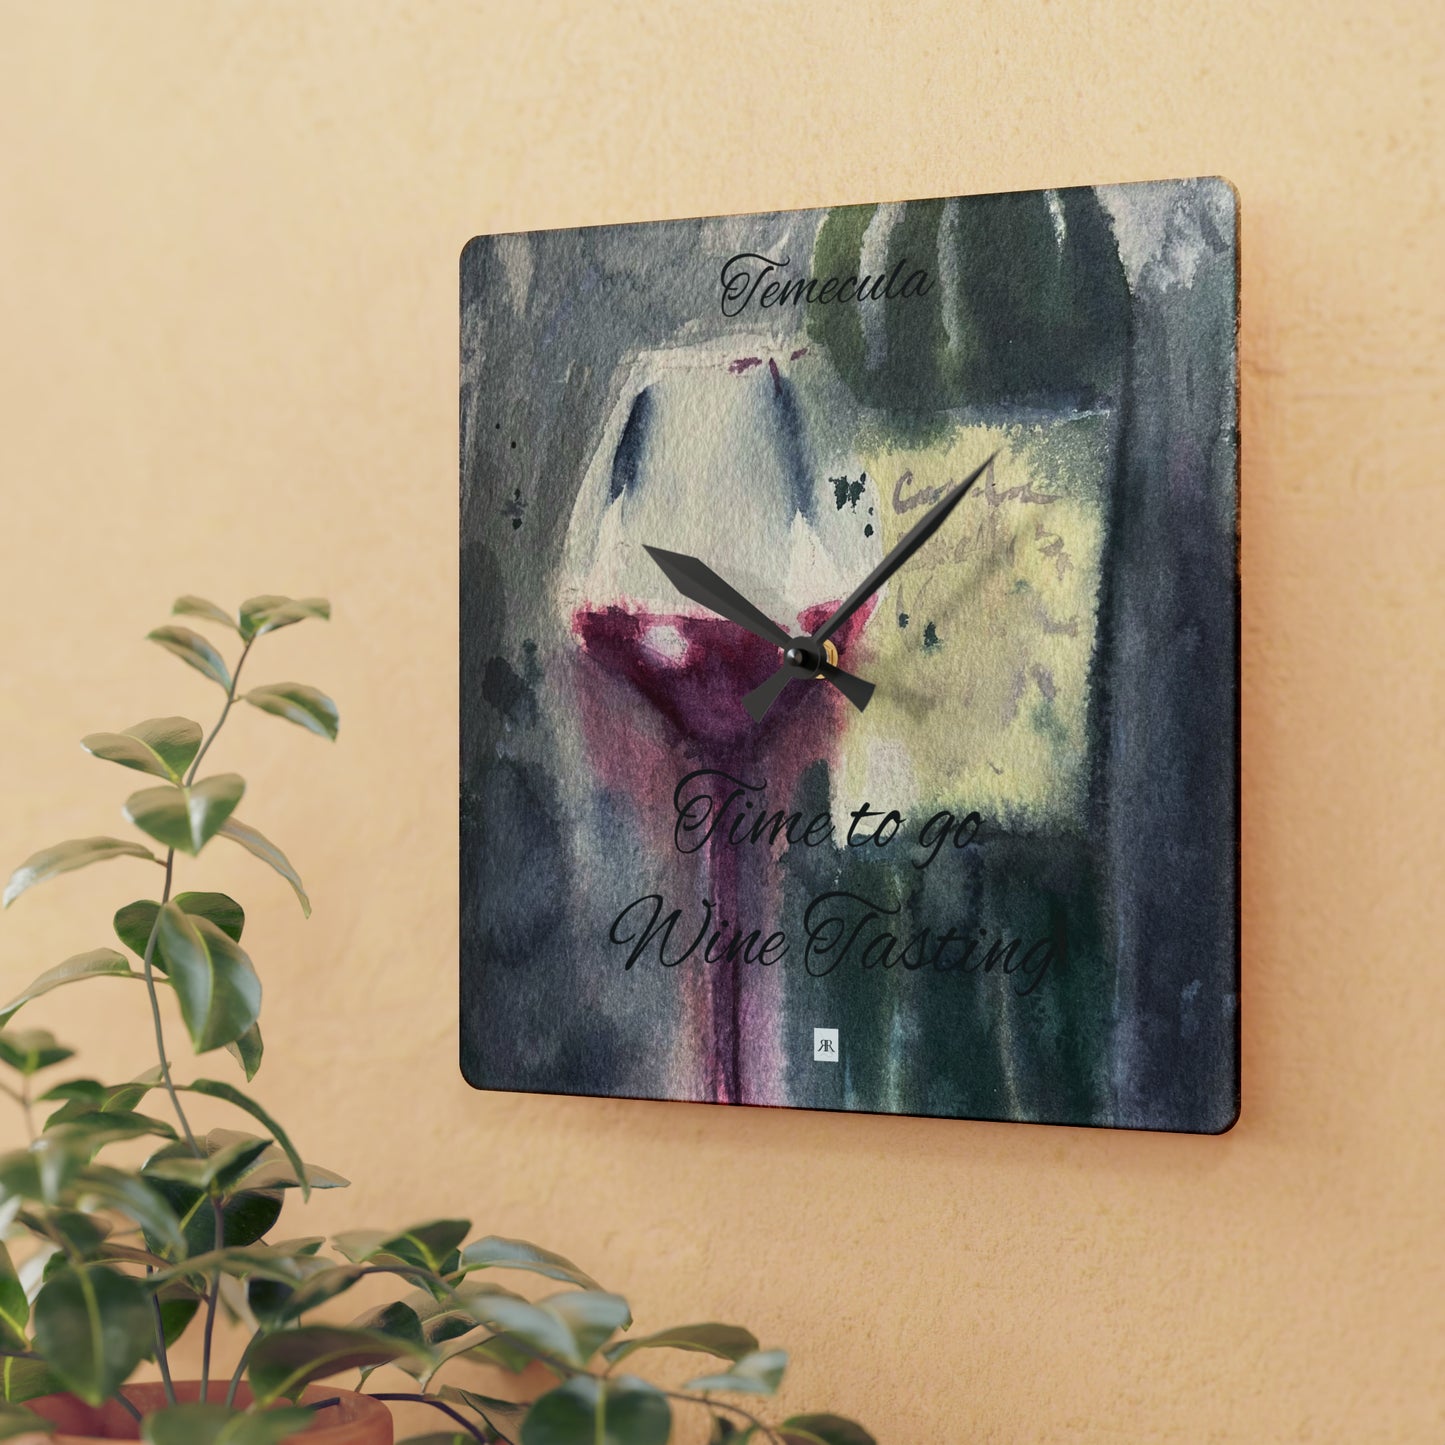 Temecula "Time to go Wine Tasting" Acrylic Wall Clock